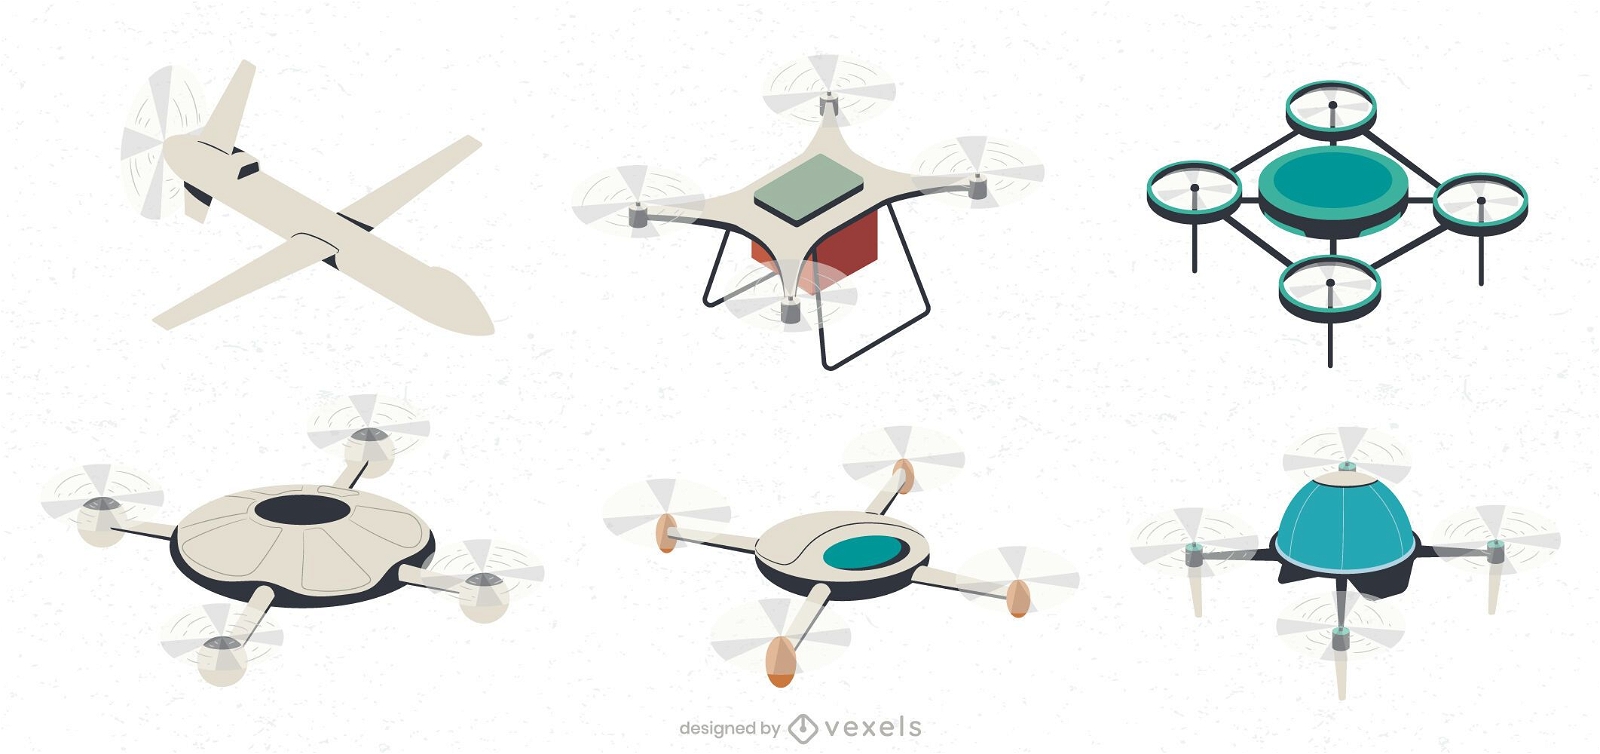 Drone illustration collection set